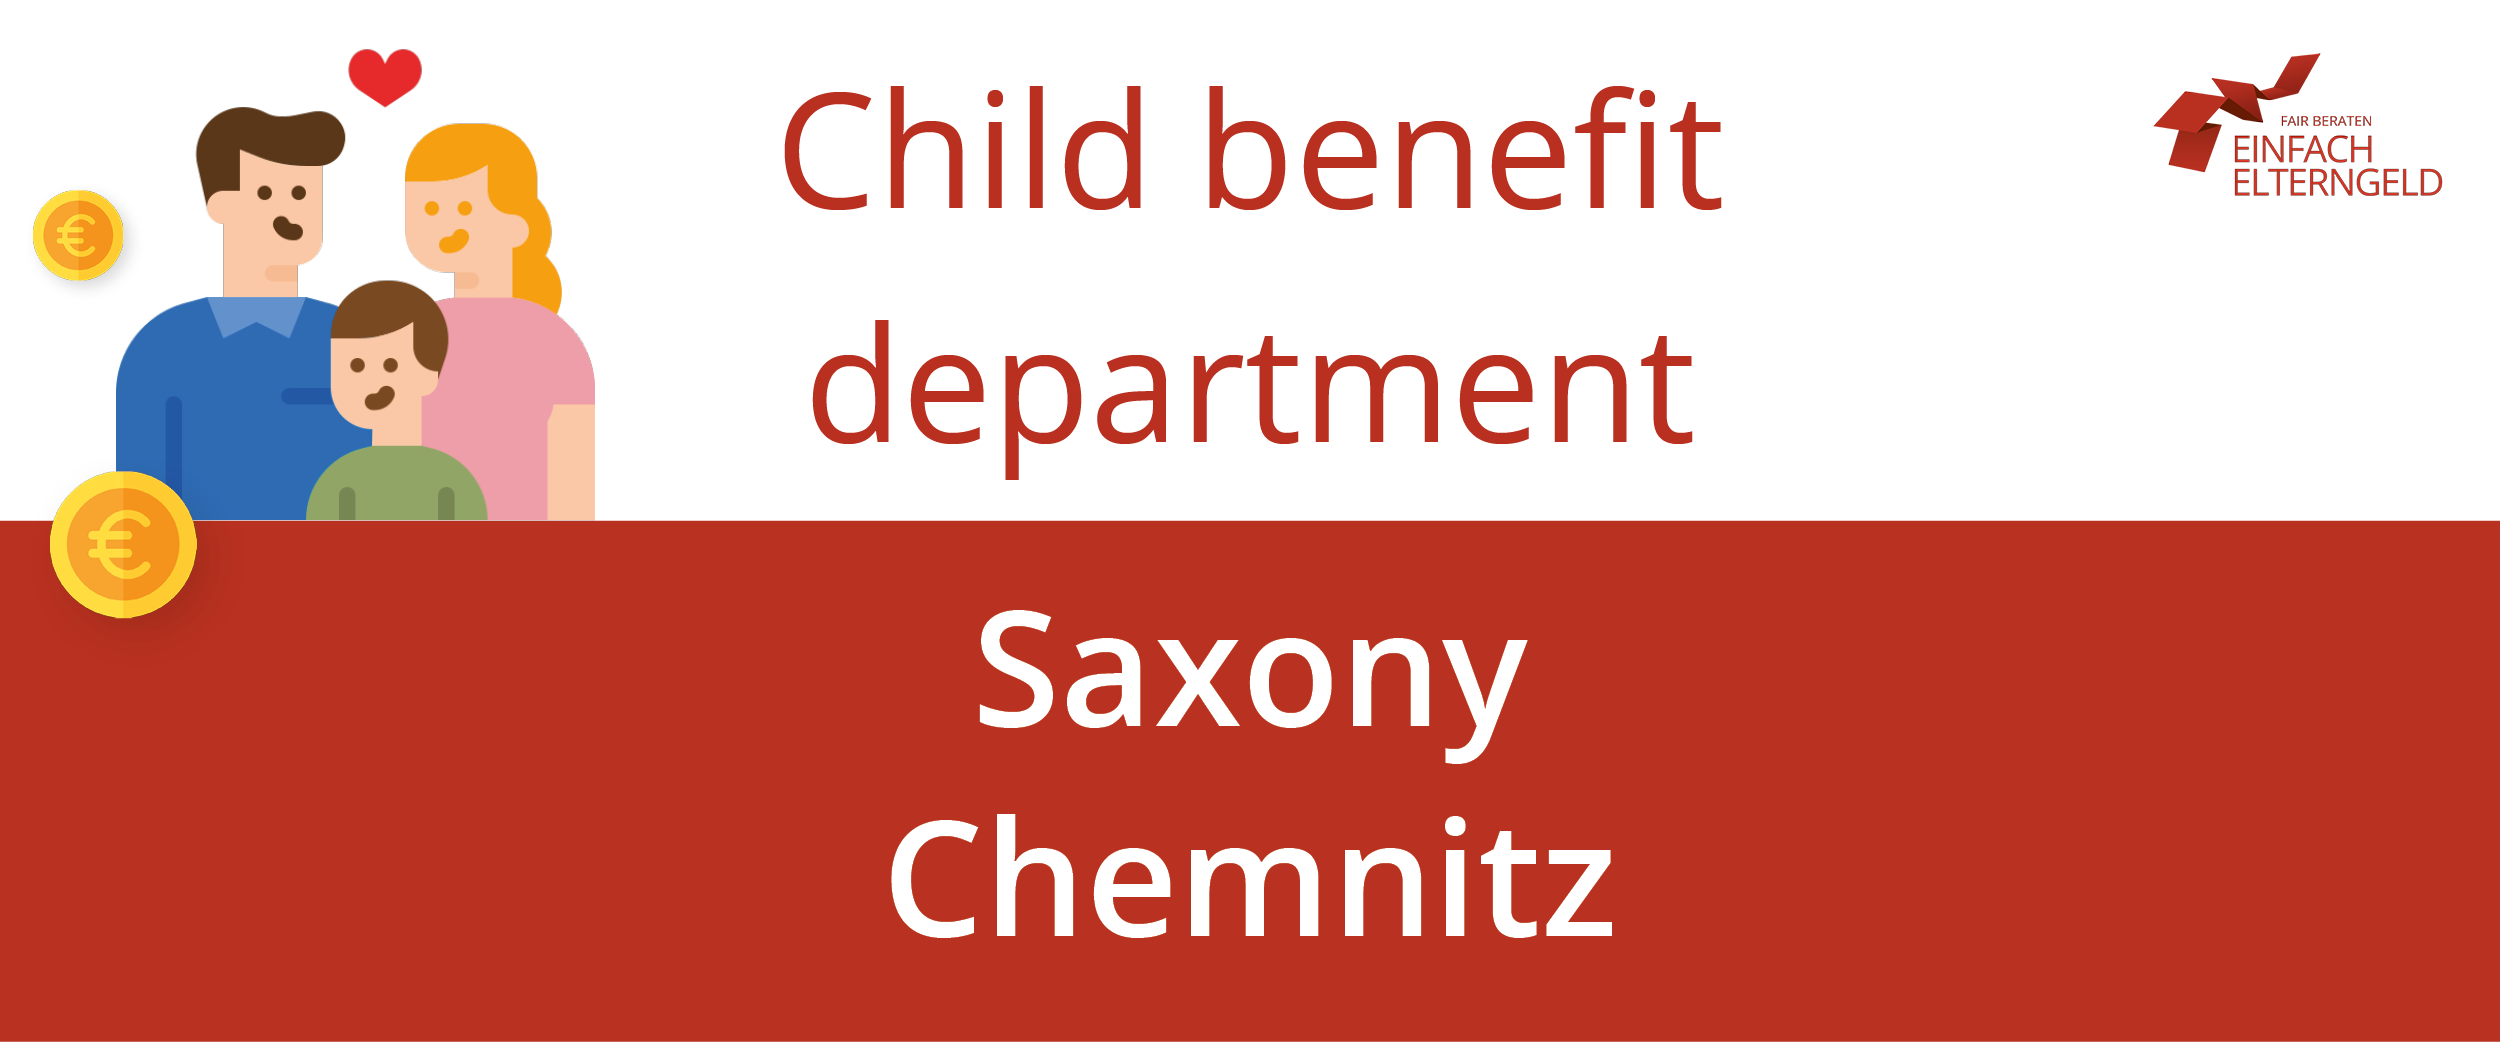 We present you the Child benefit department Saxony Chemnitz.